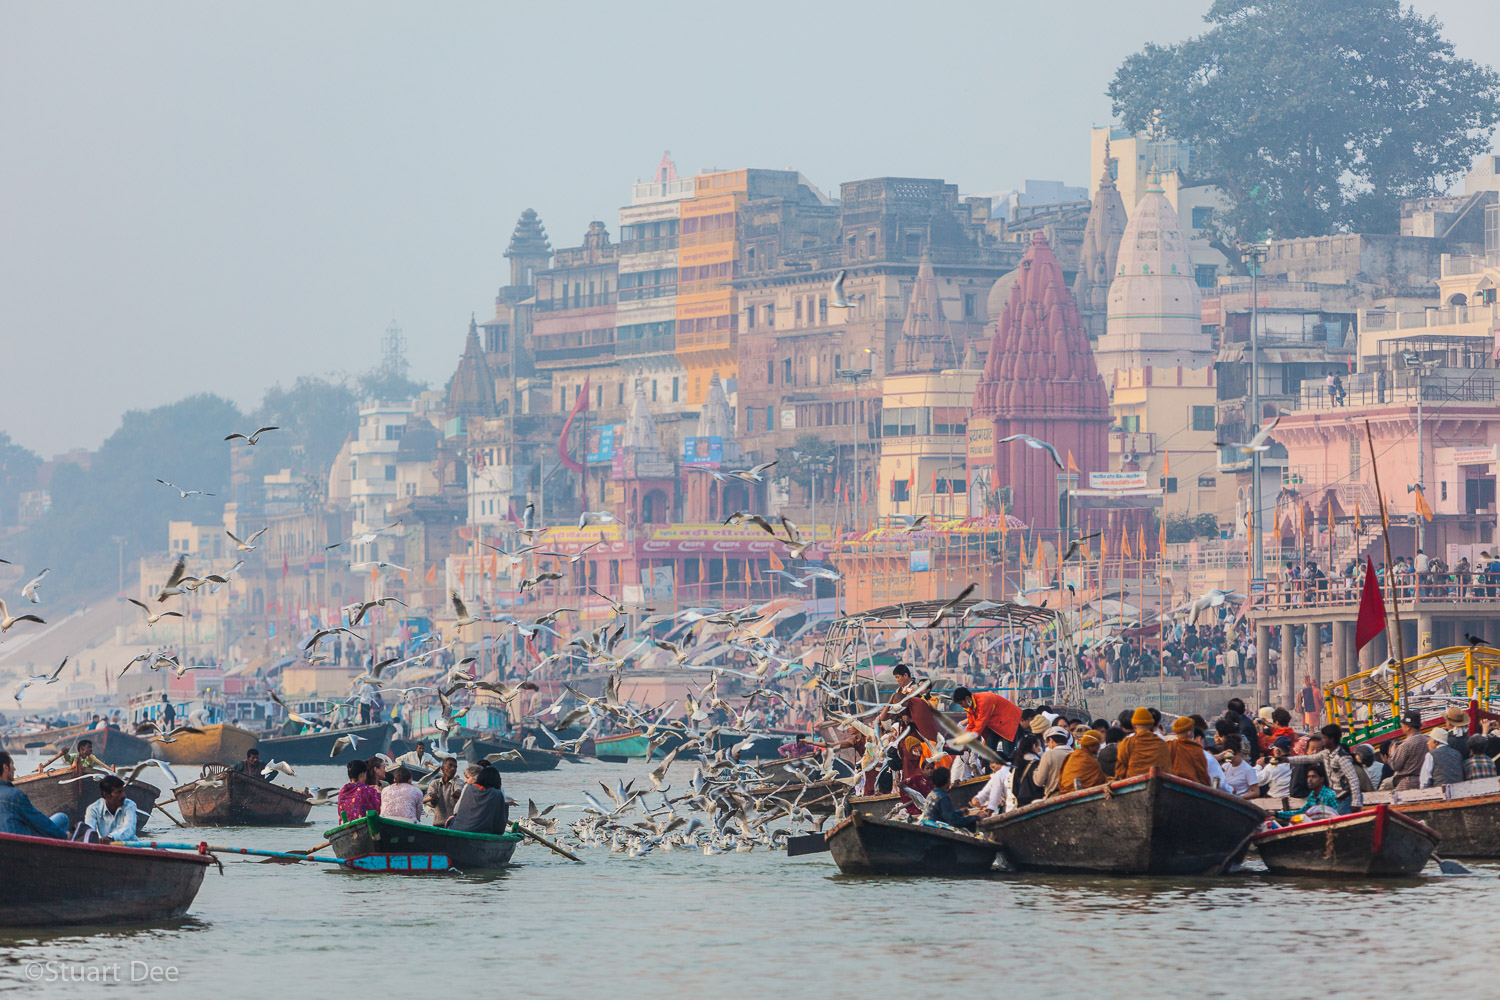  Early morning at the Ganges, Varanasi, Uttar Pradesh, India 